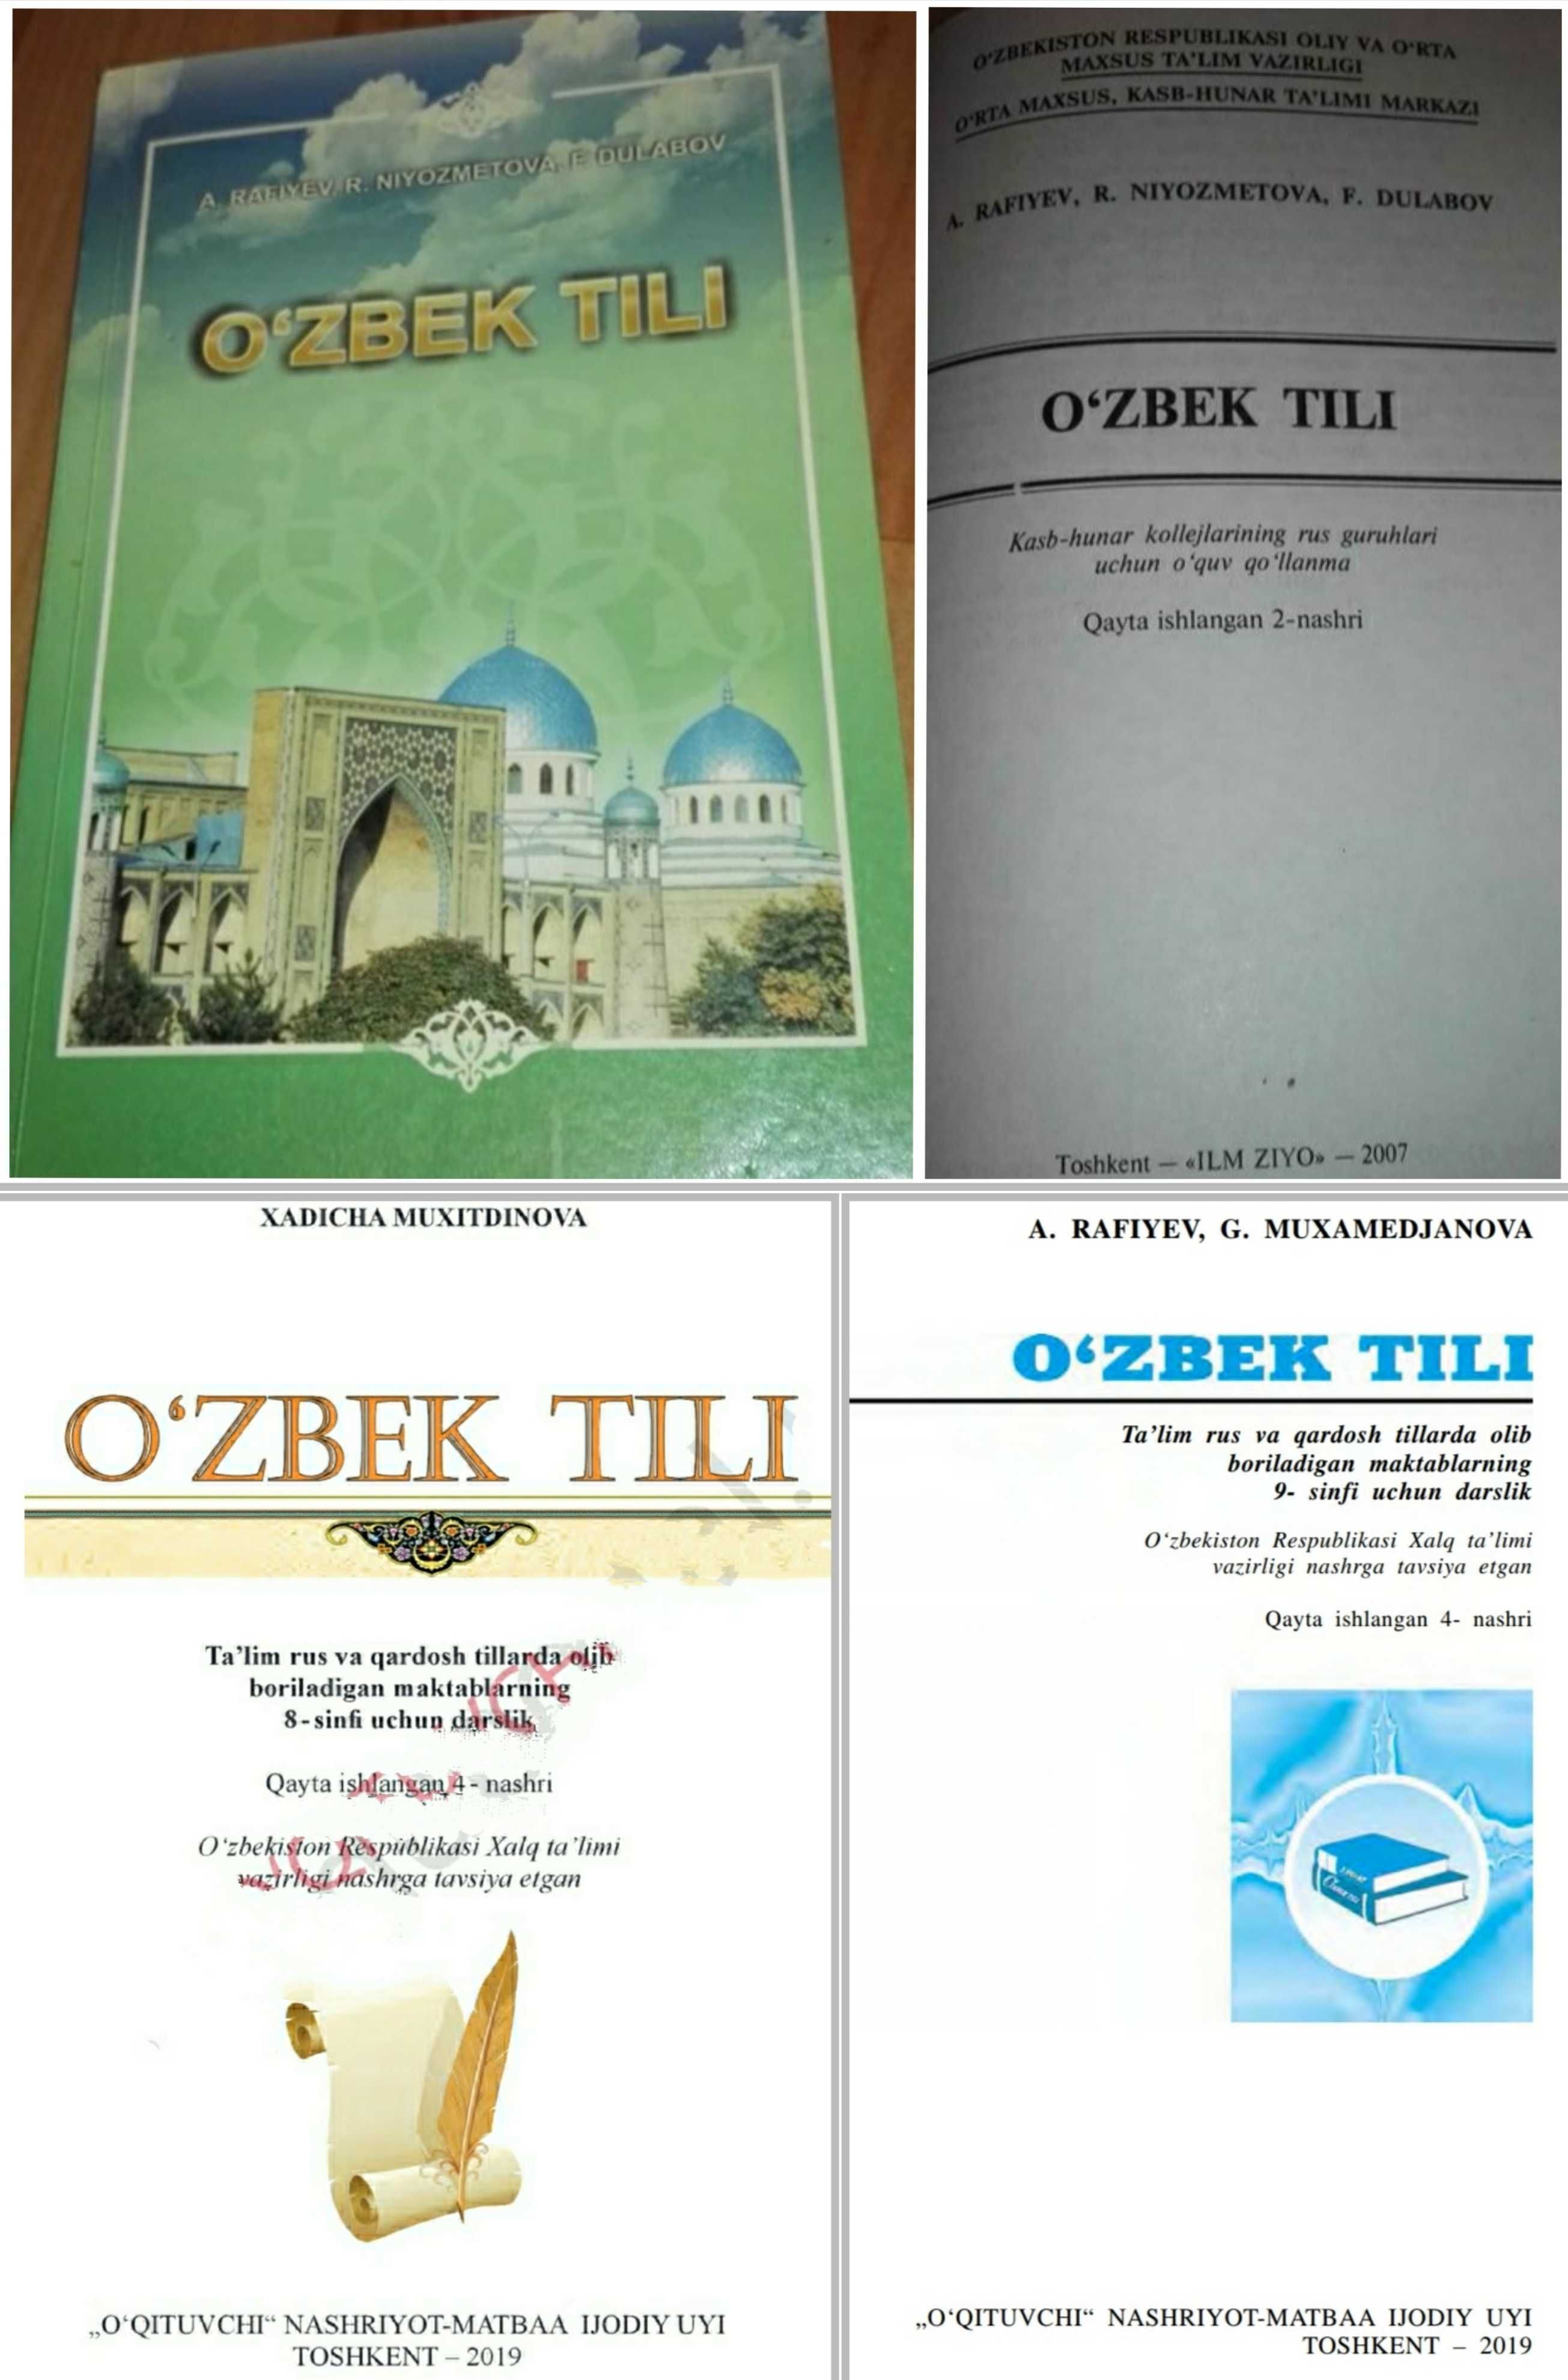 O'zbek Tili 2,3,4,5,6,7,8,9,10 sinf, узбекский язык, узбек тили